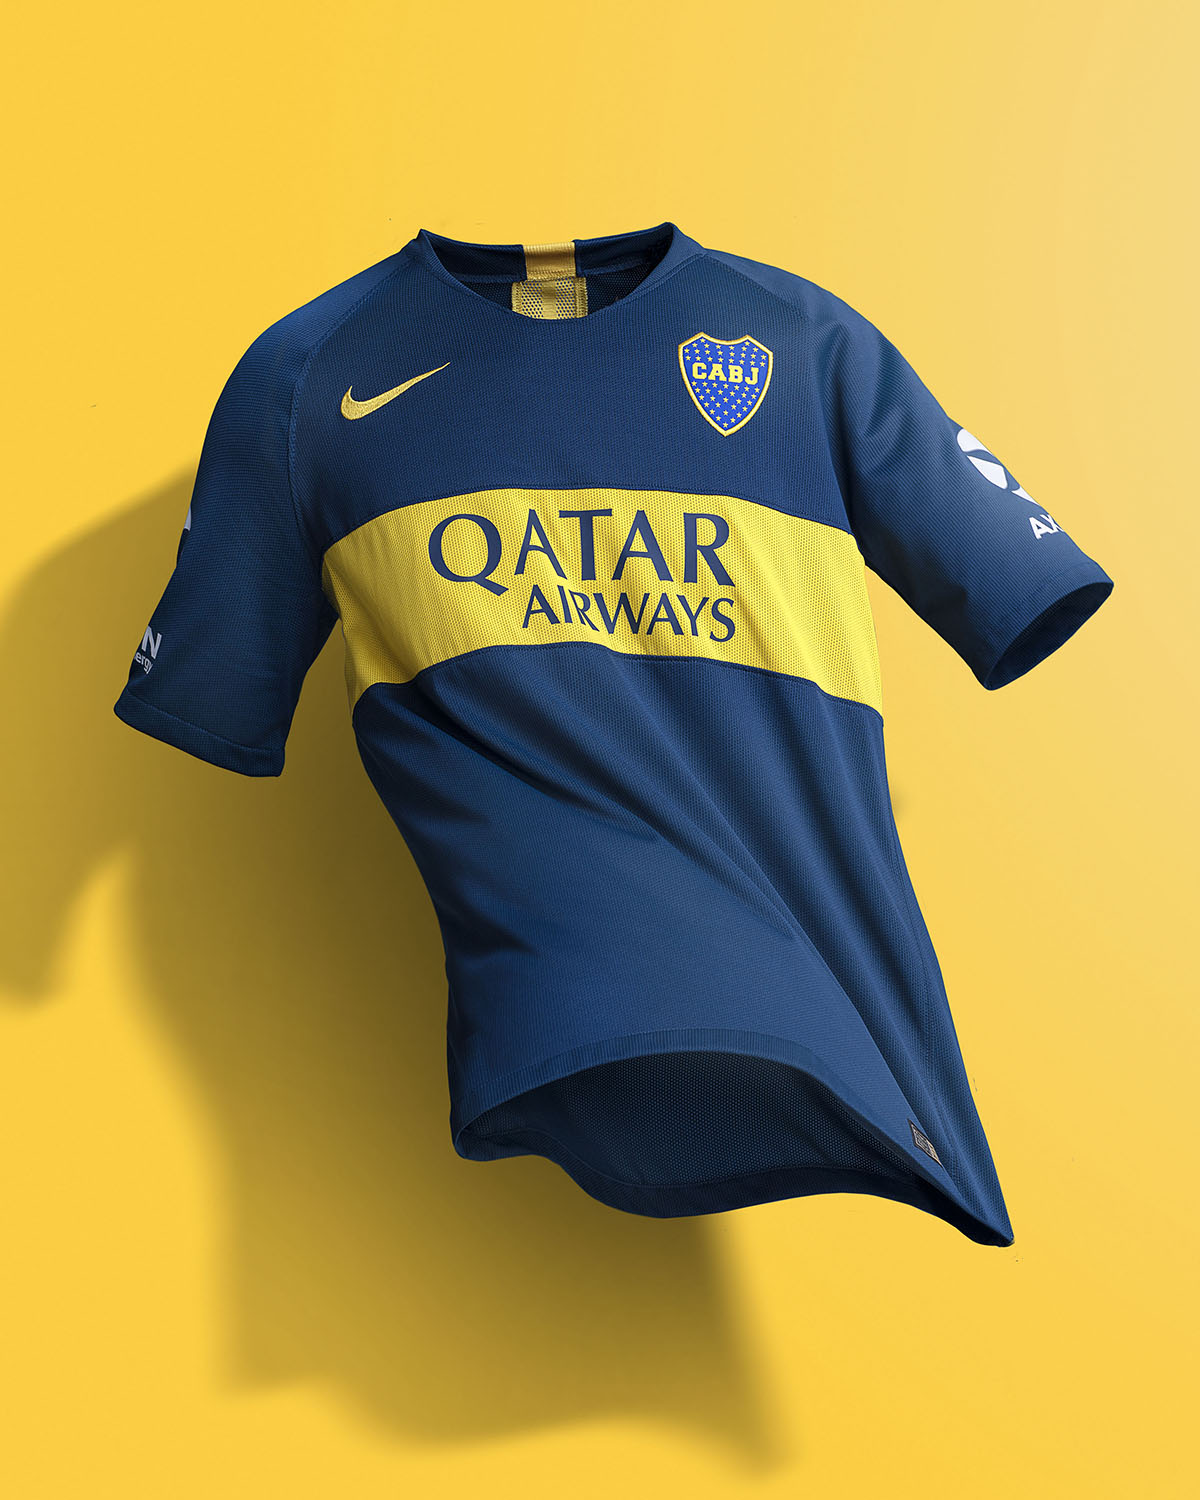 Camisetas Nike de Boca Juniors 2018/19 - Titular - Marca de